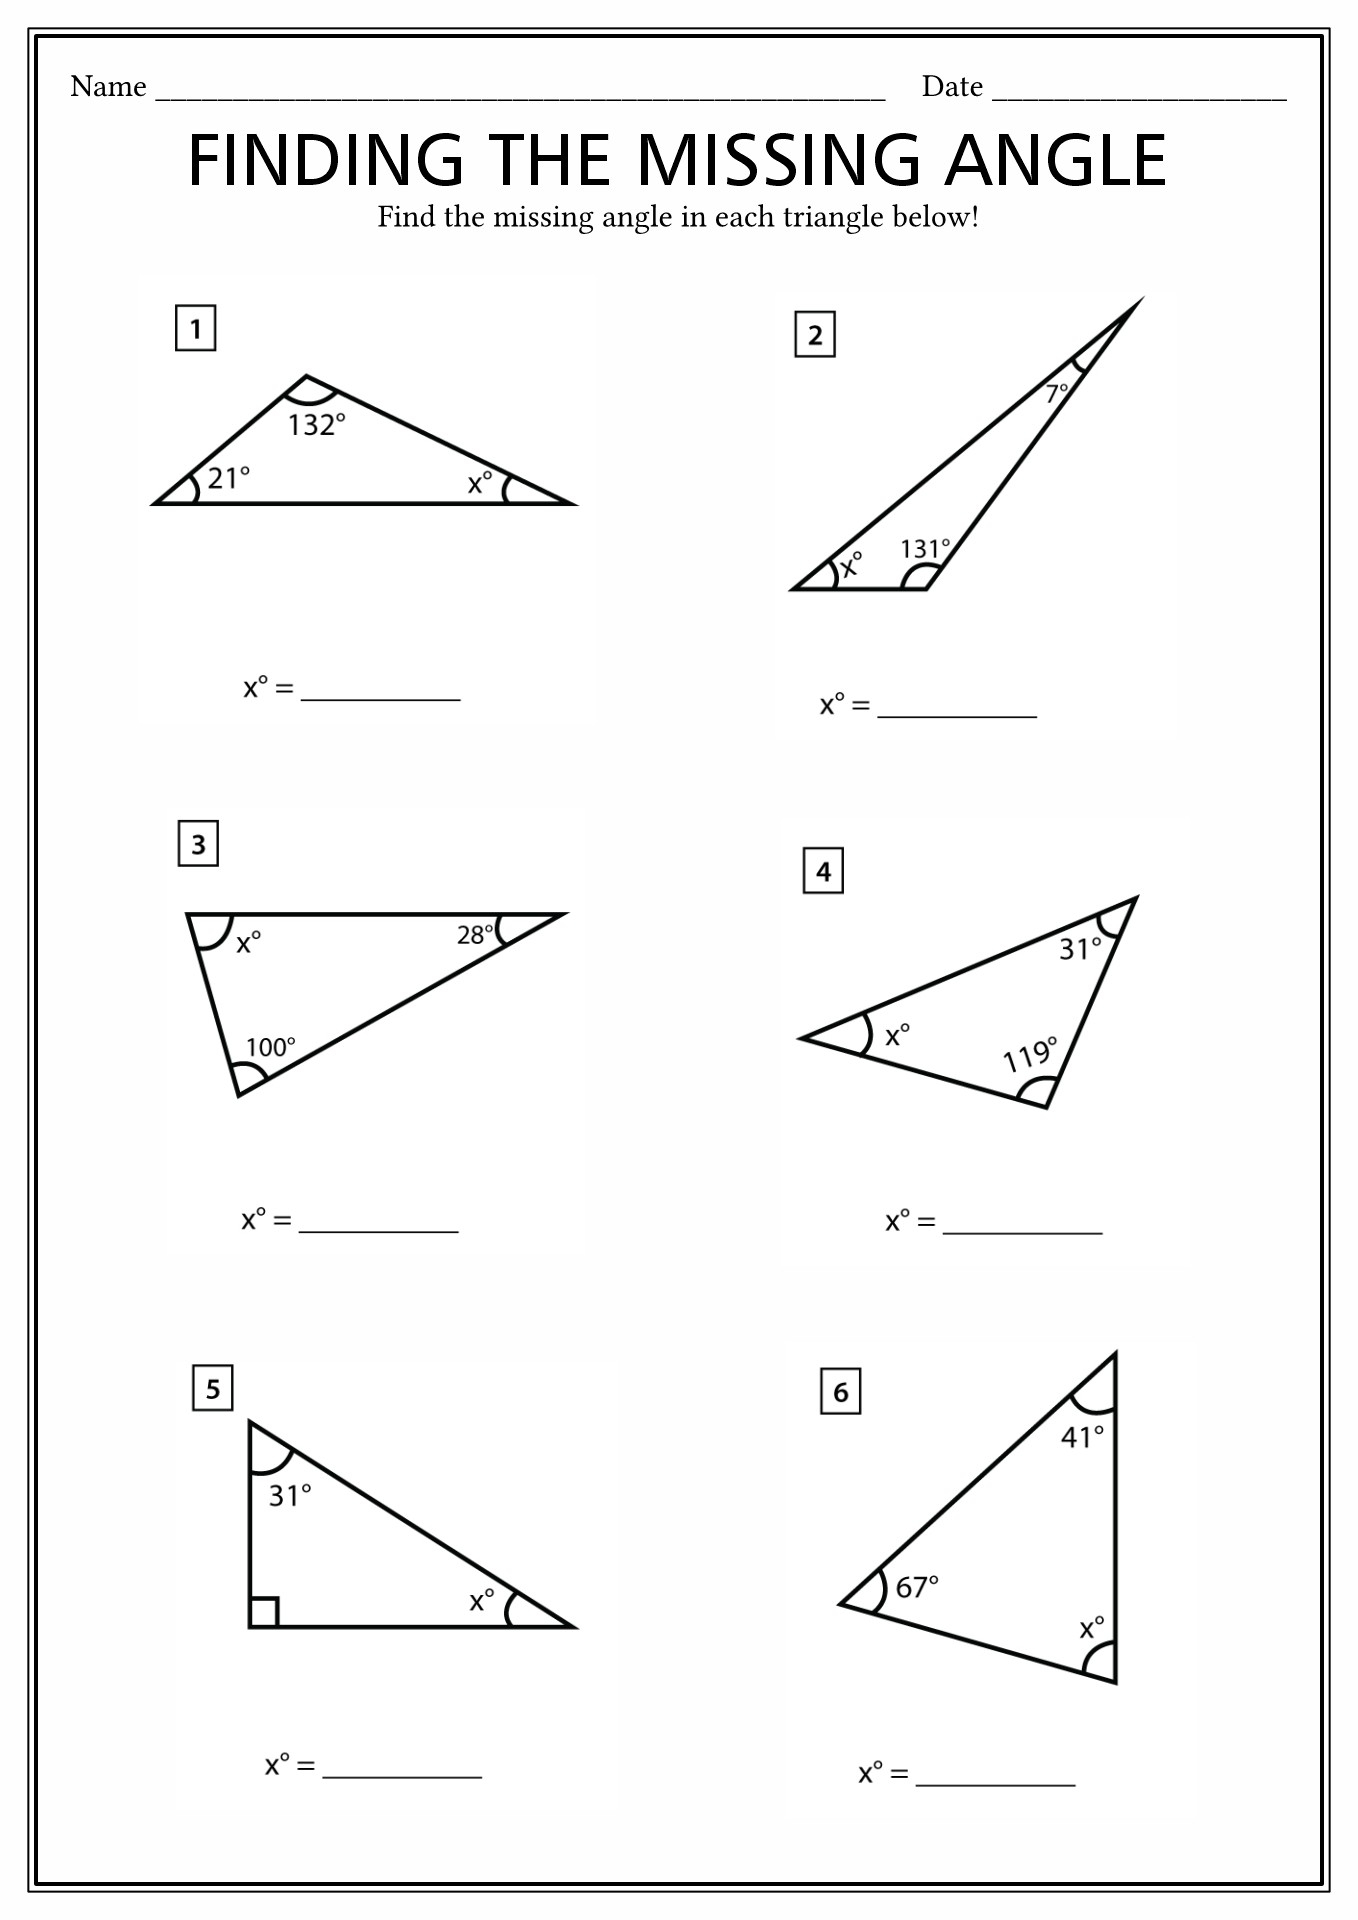 12 Right Triangle Trigonometry Worksheet Worksheeto